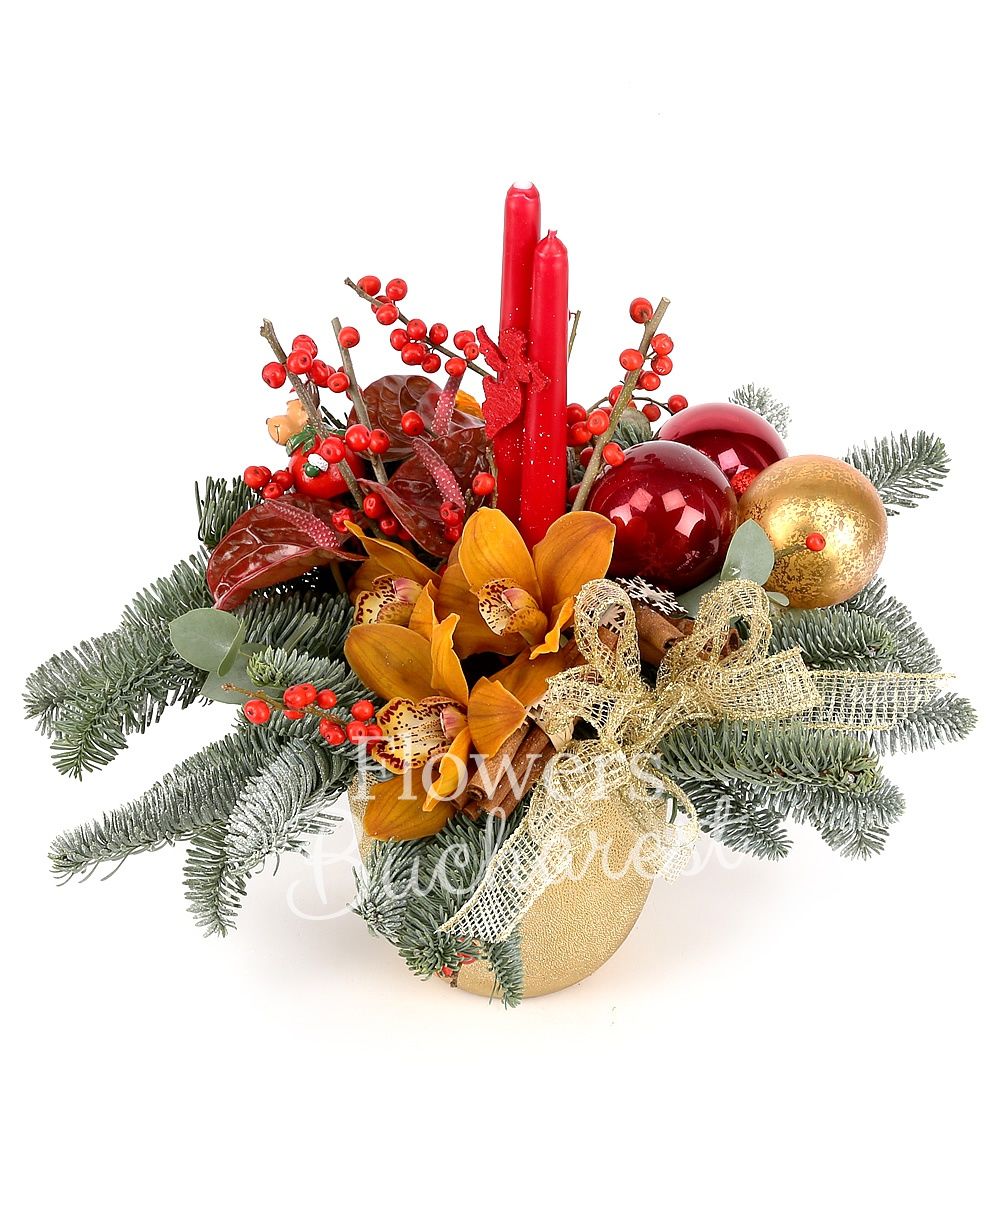 3 red anthurium, ilex, 1 yellow cymbidium, globes, dried fruits, candle, fir